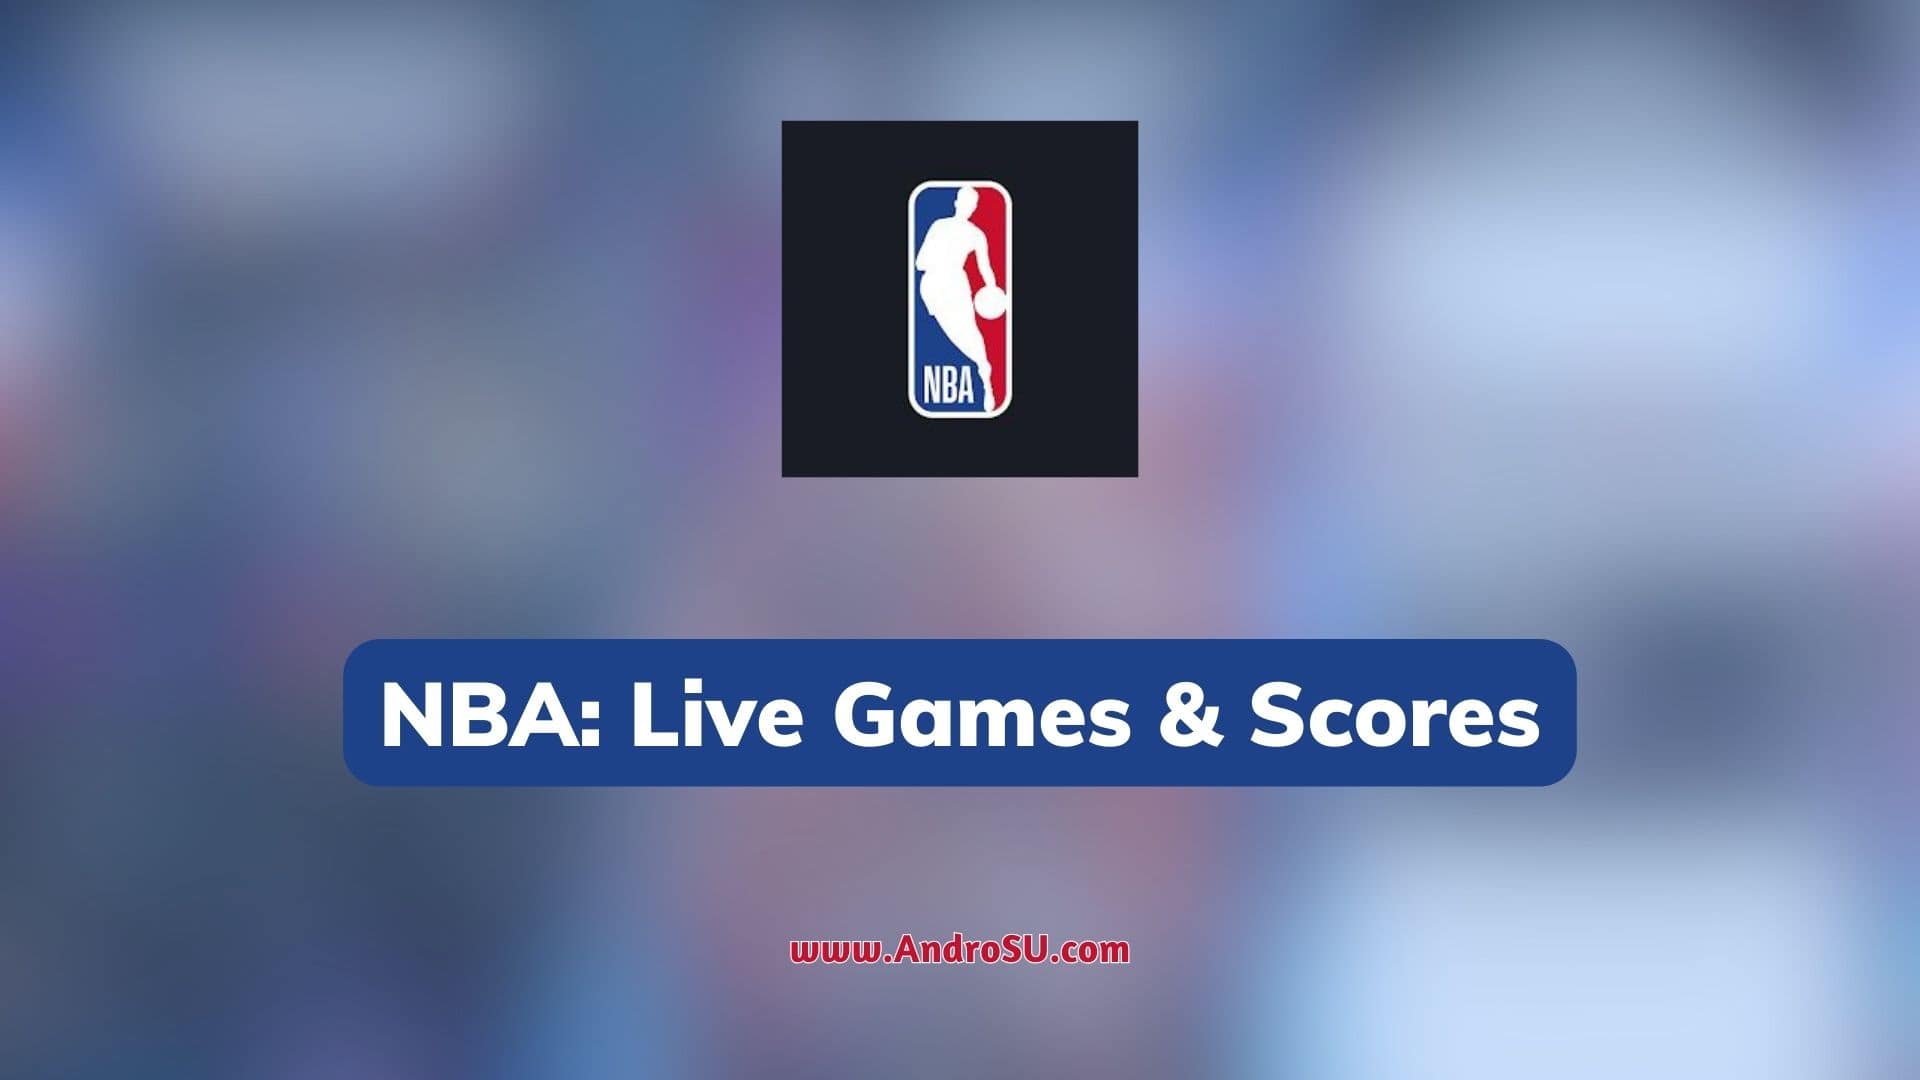 Download NBA Live Games & Scores APK v0.32.1 Android